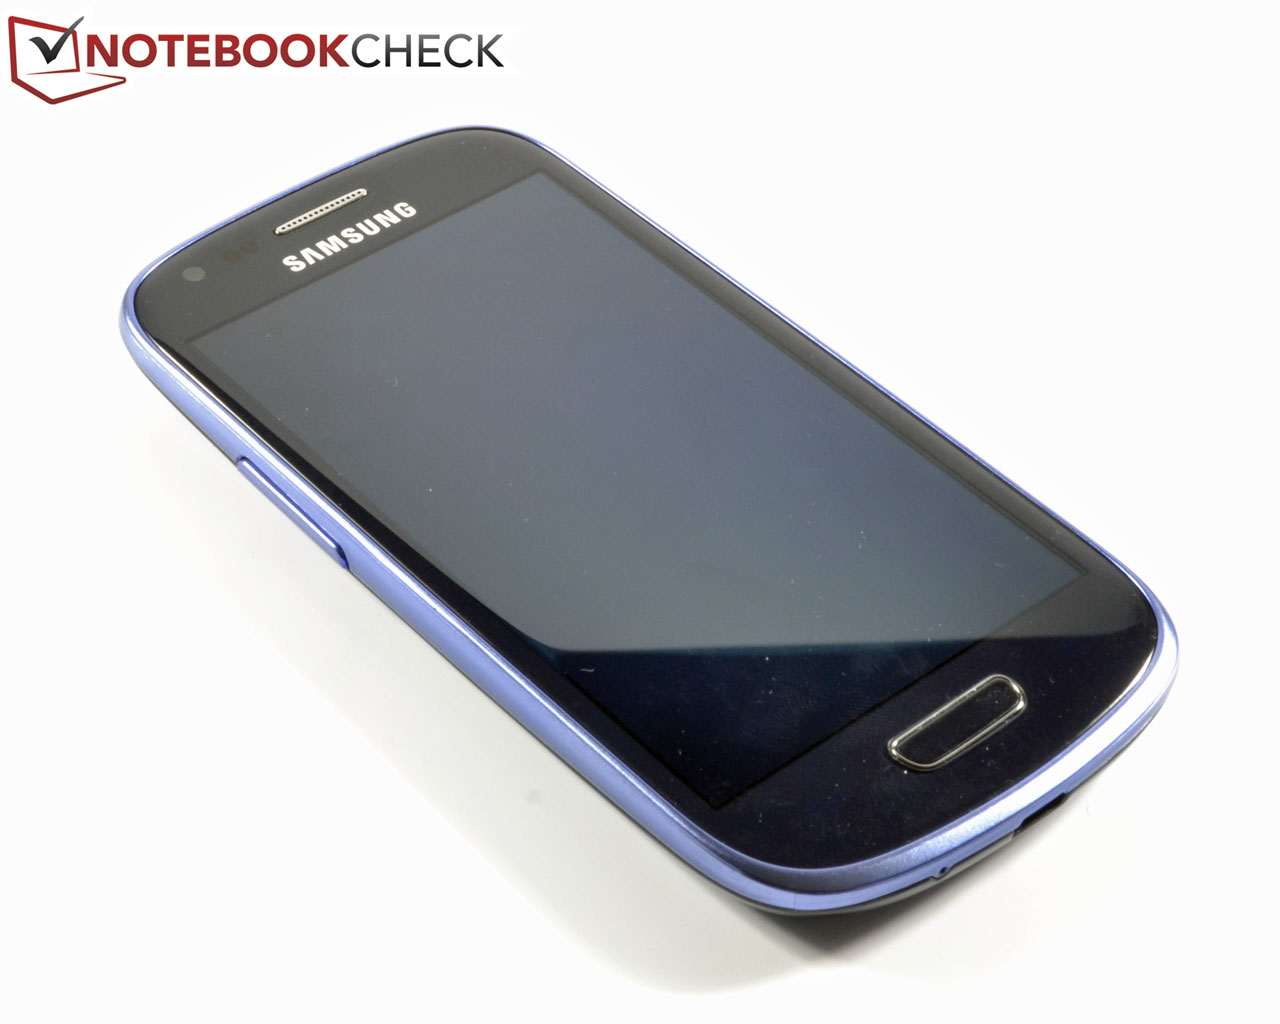 Review Samsung S3 Mini Smartphone NotebookCheck.net